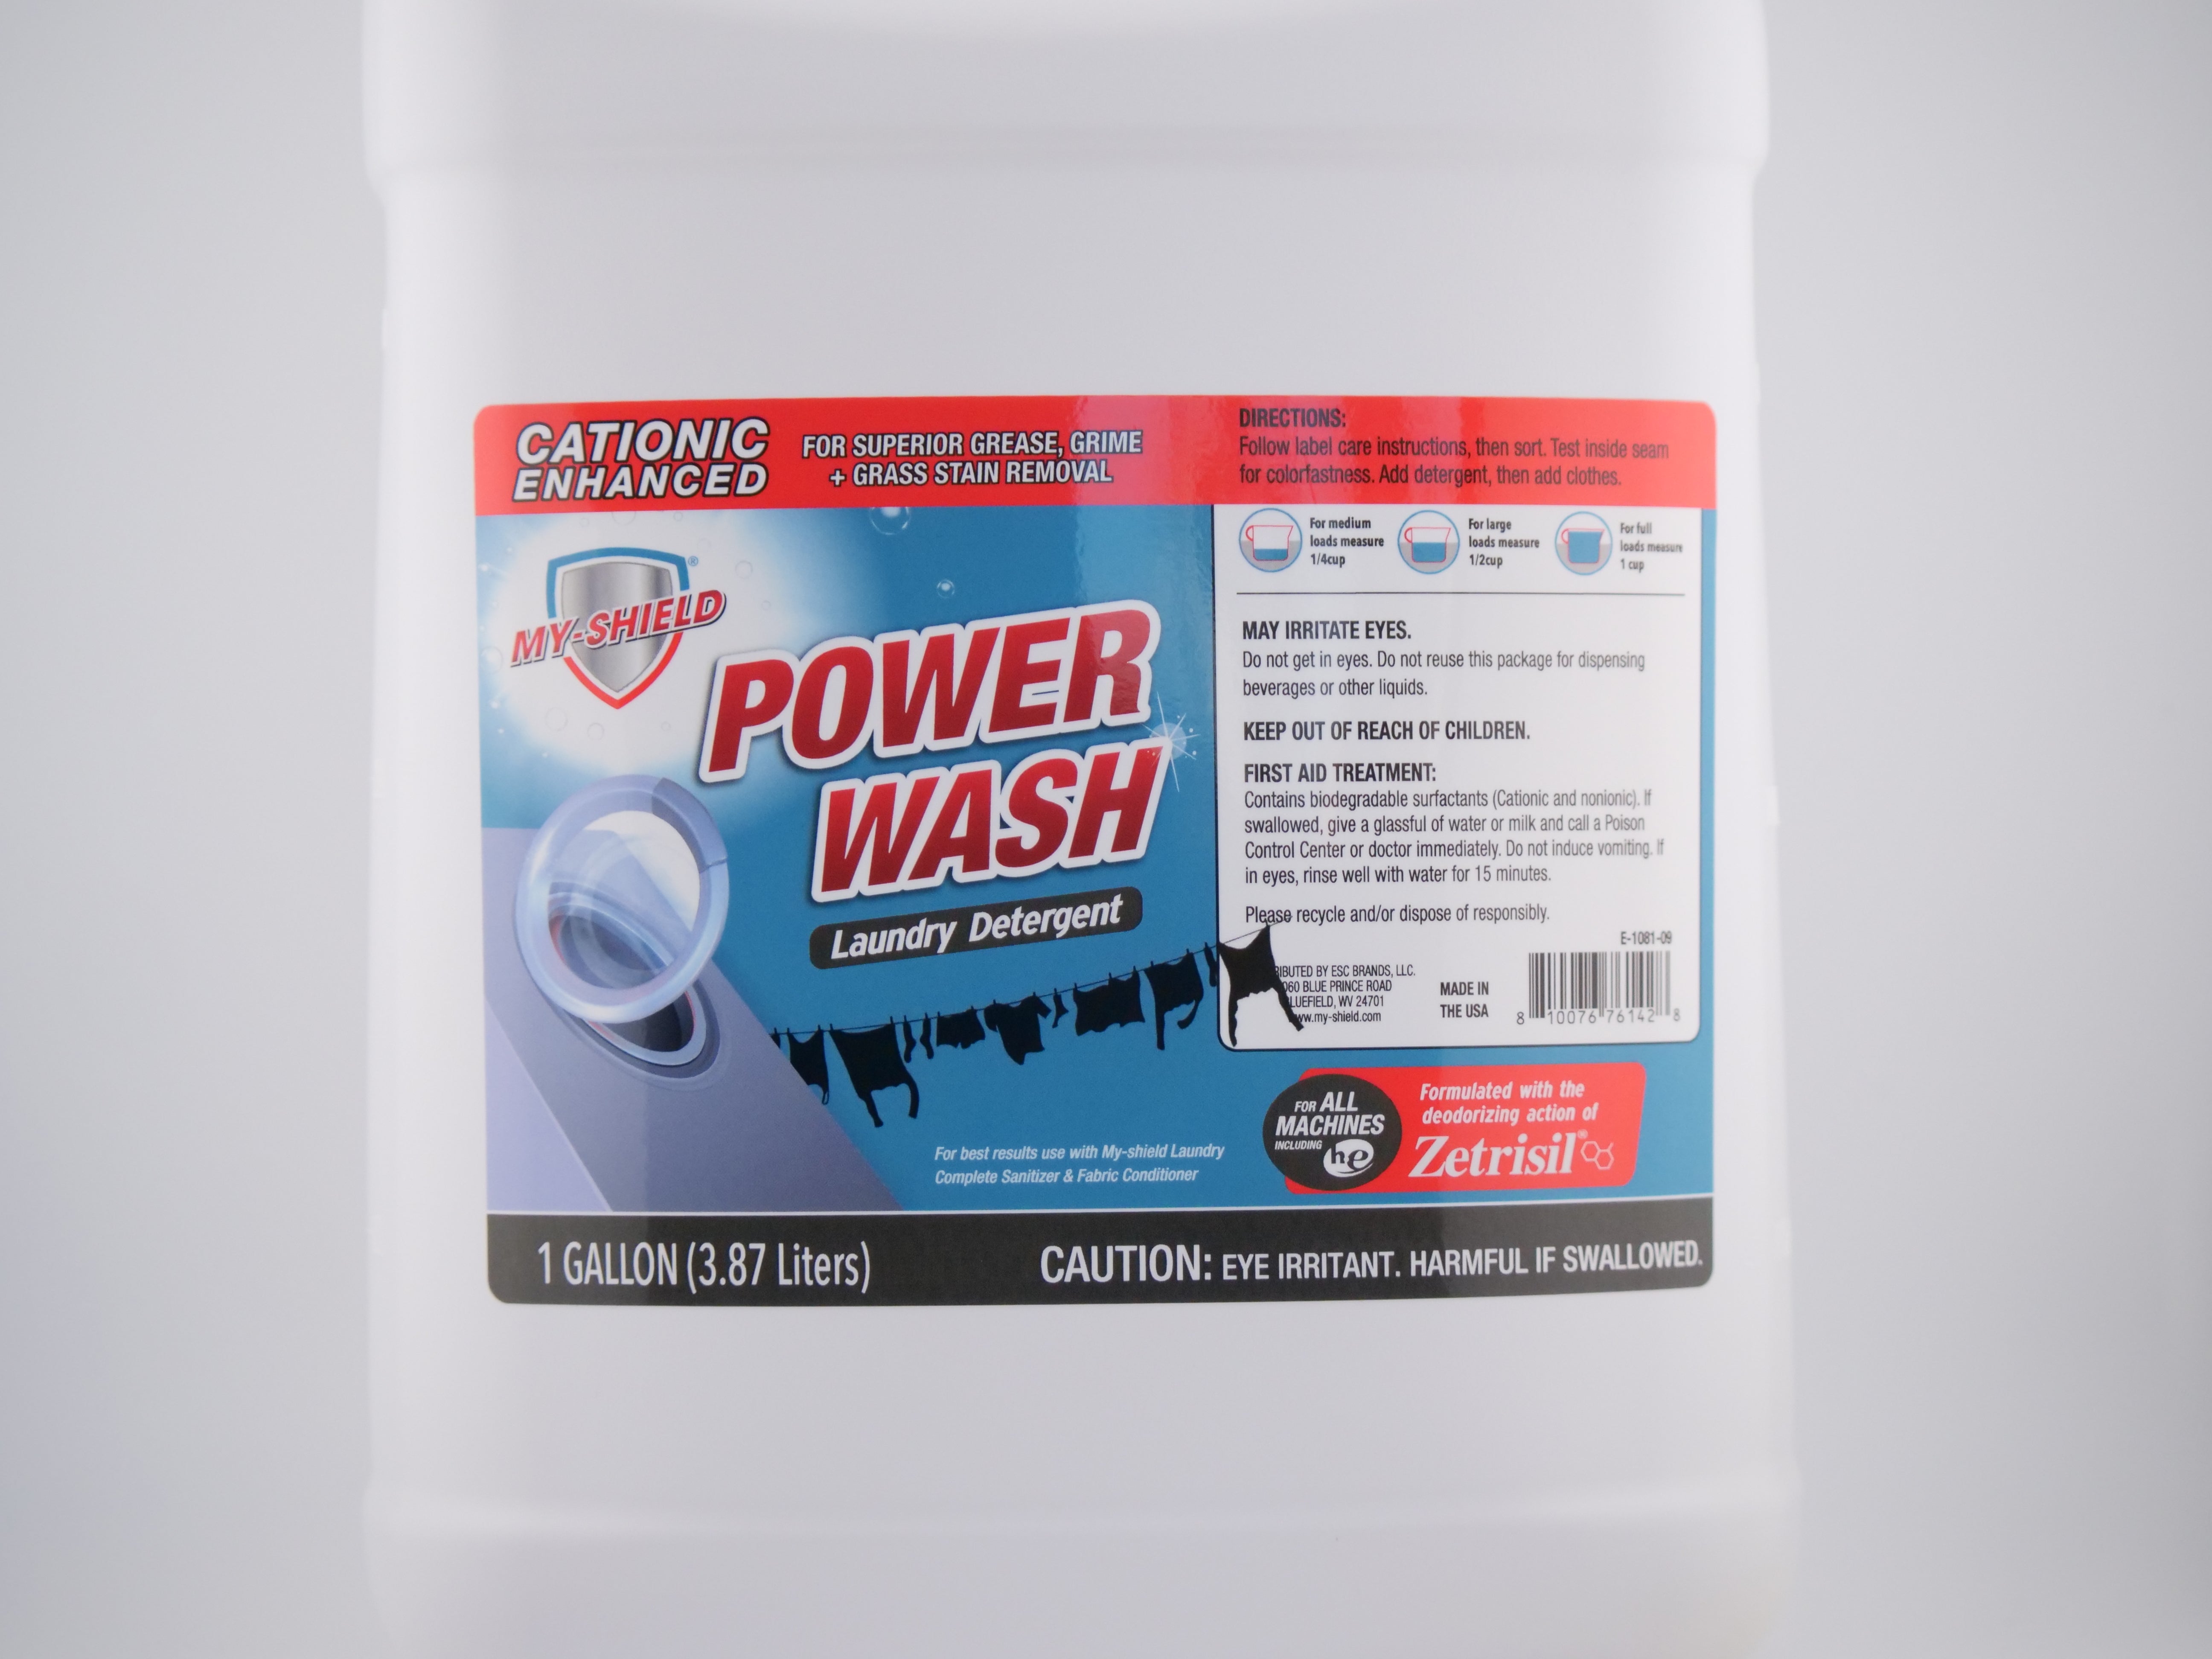 My-Shield® Power Wash Laundry Detergent